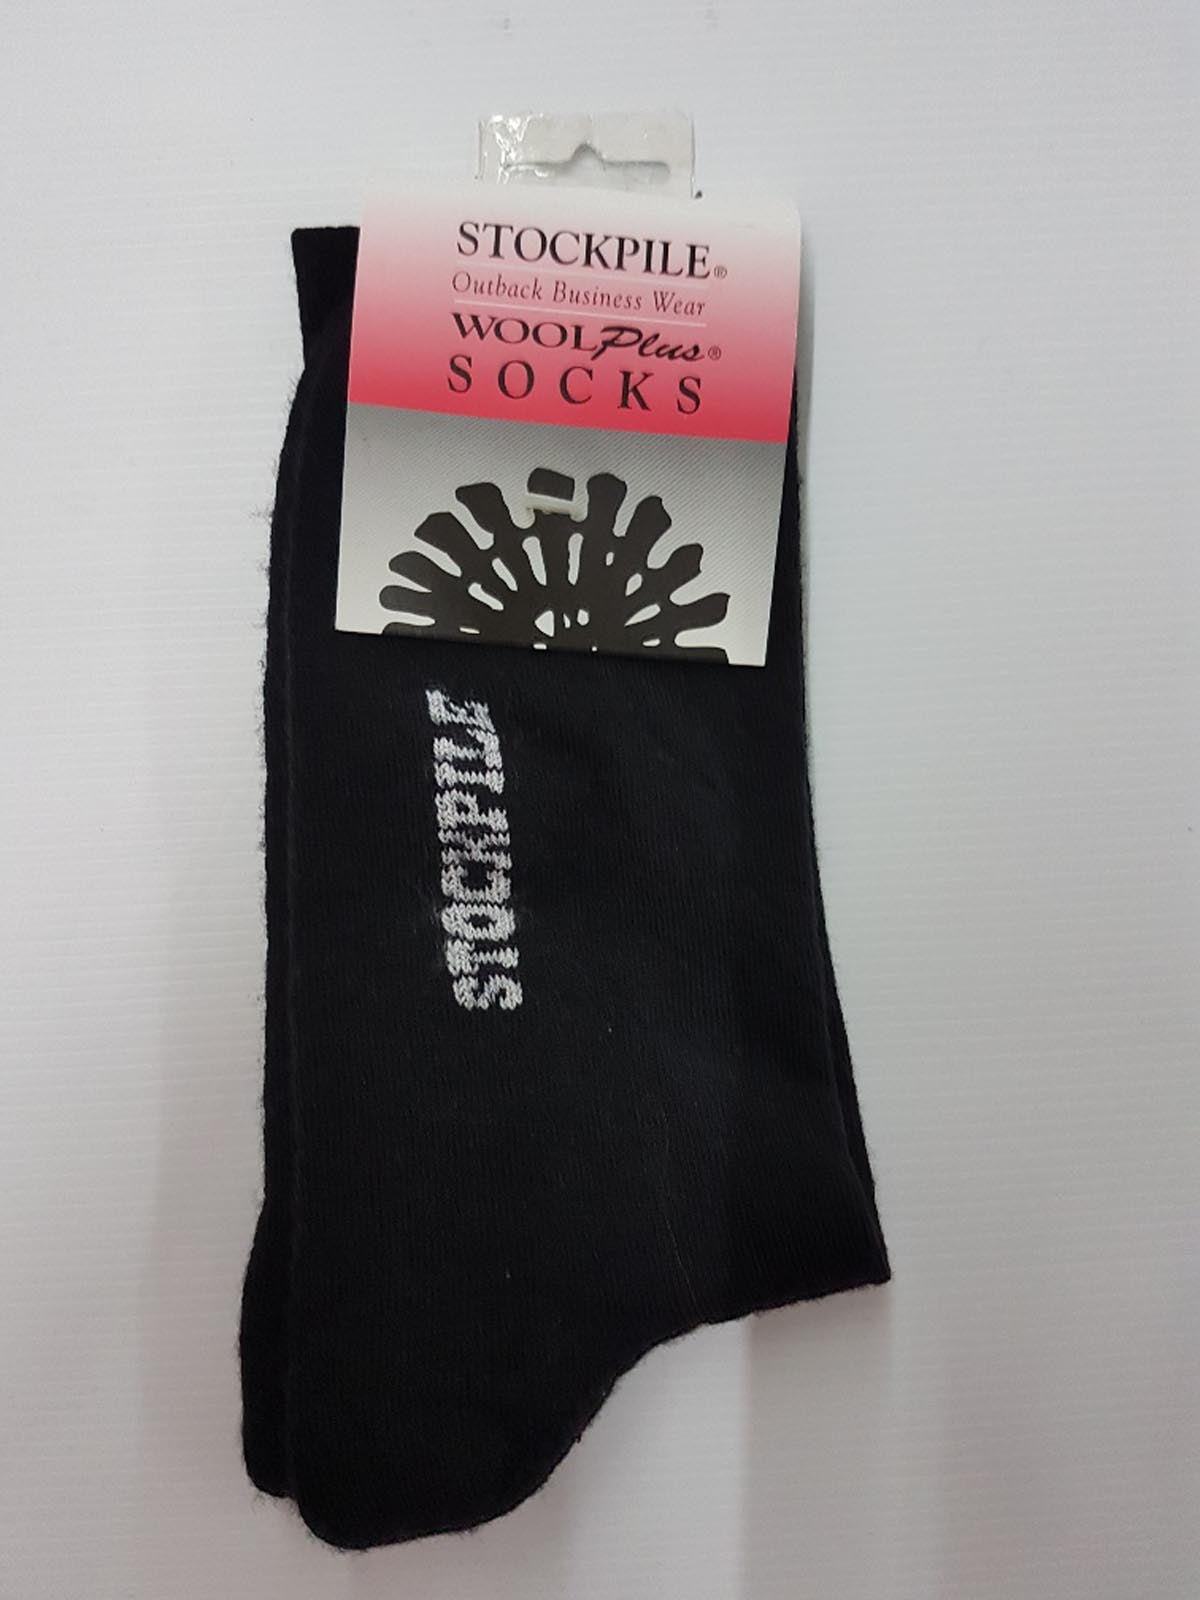 Stockpile Wool Plus Business Sock Mens Socks by Stockpile Outback Workwear | The Bloke Shop